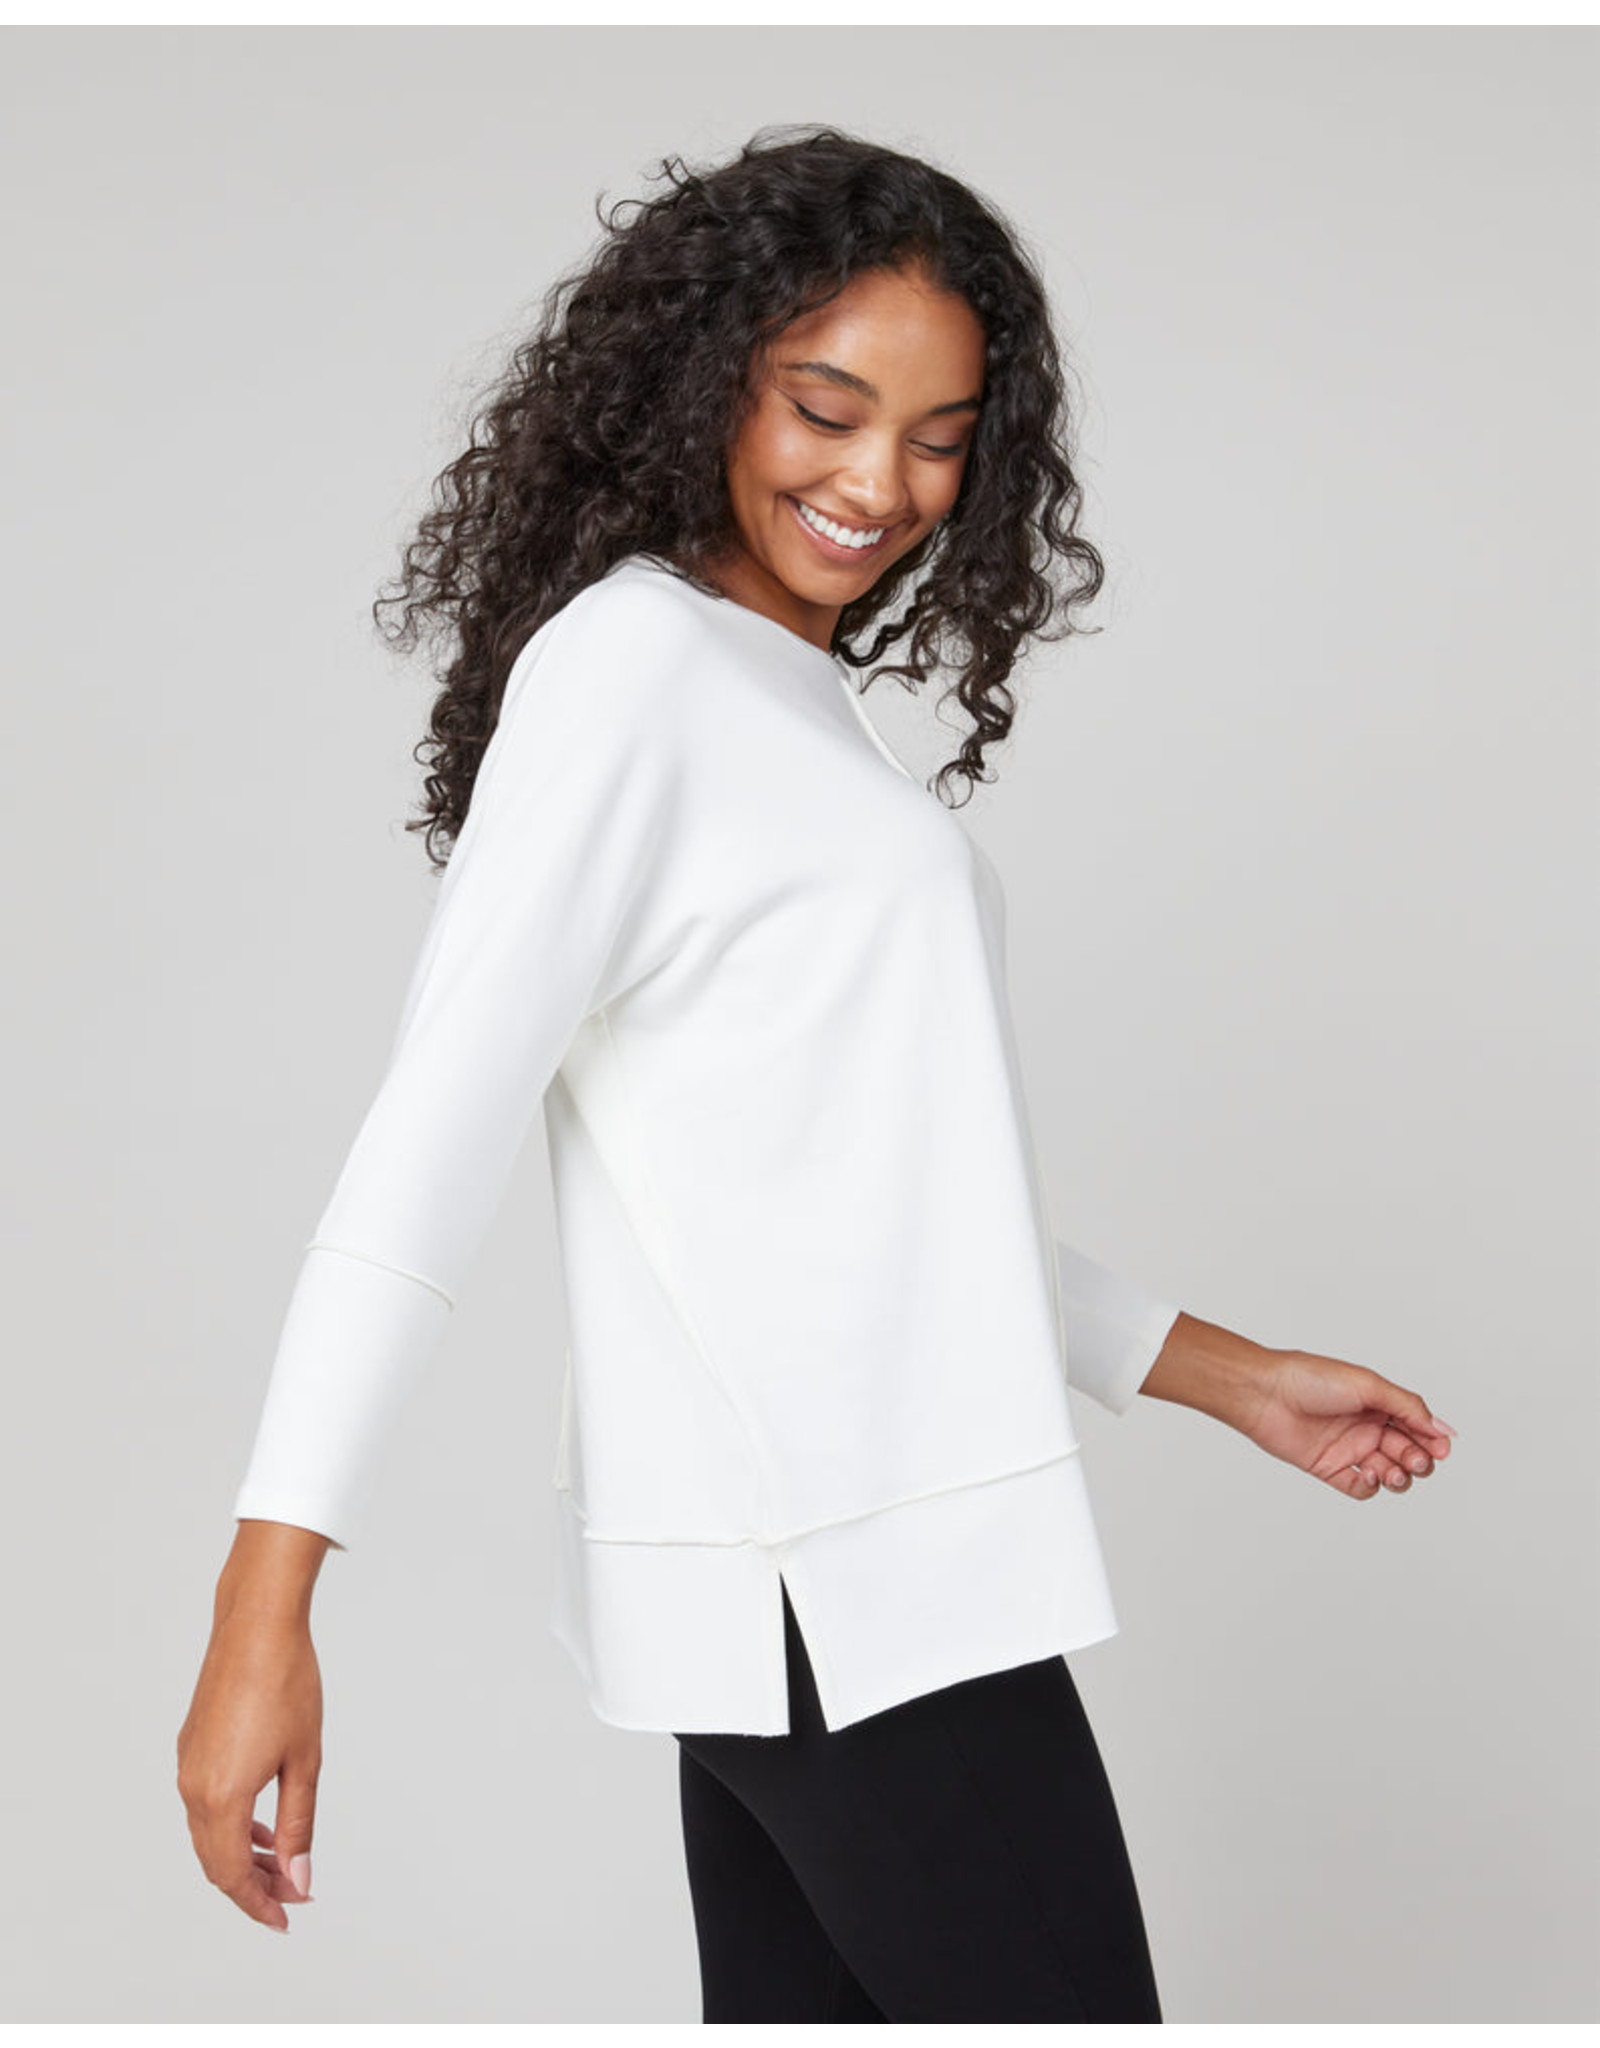 Spanx Perfect Length Dolman Sweatshirt - Oatmeal - $68.00 – Hand In Pocket